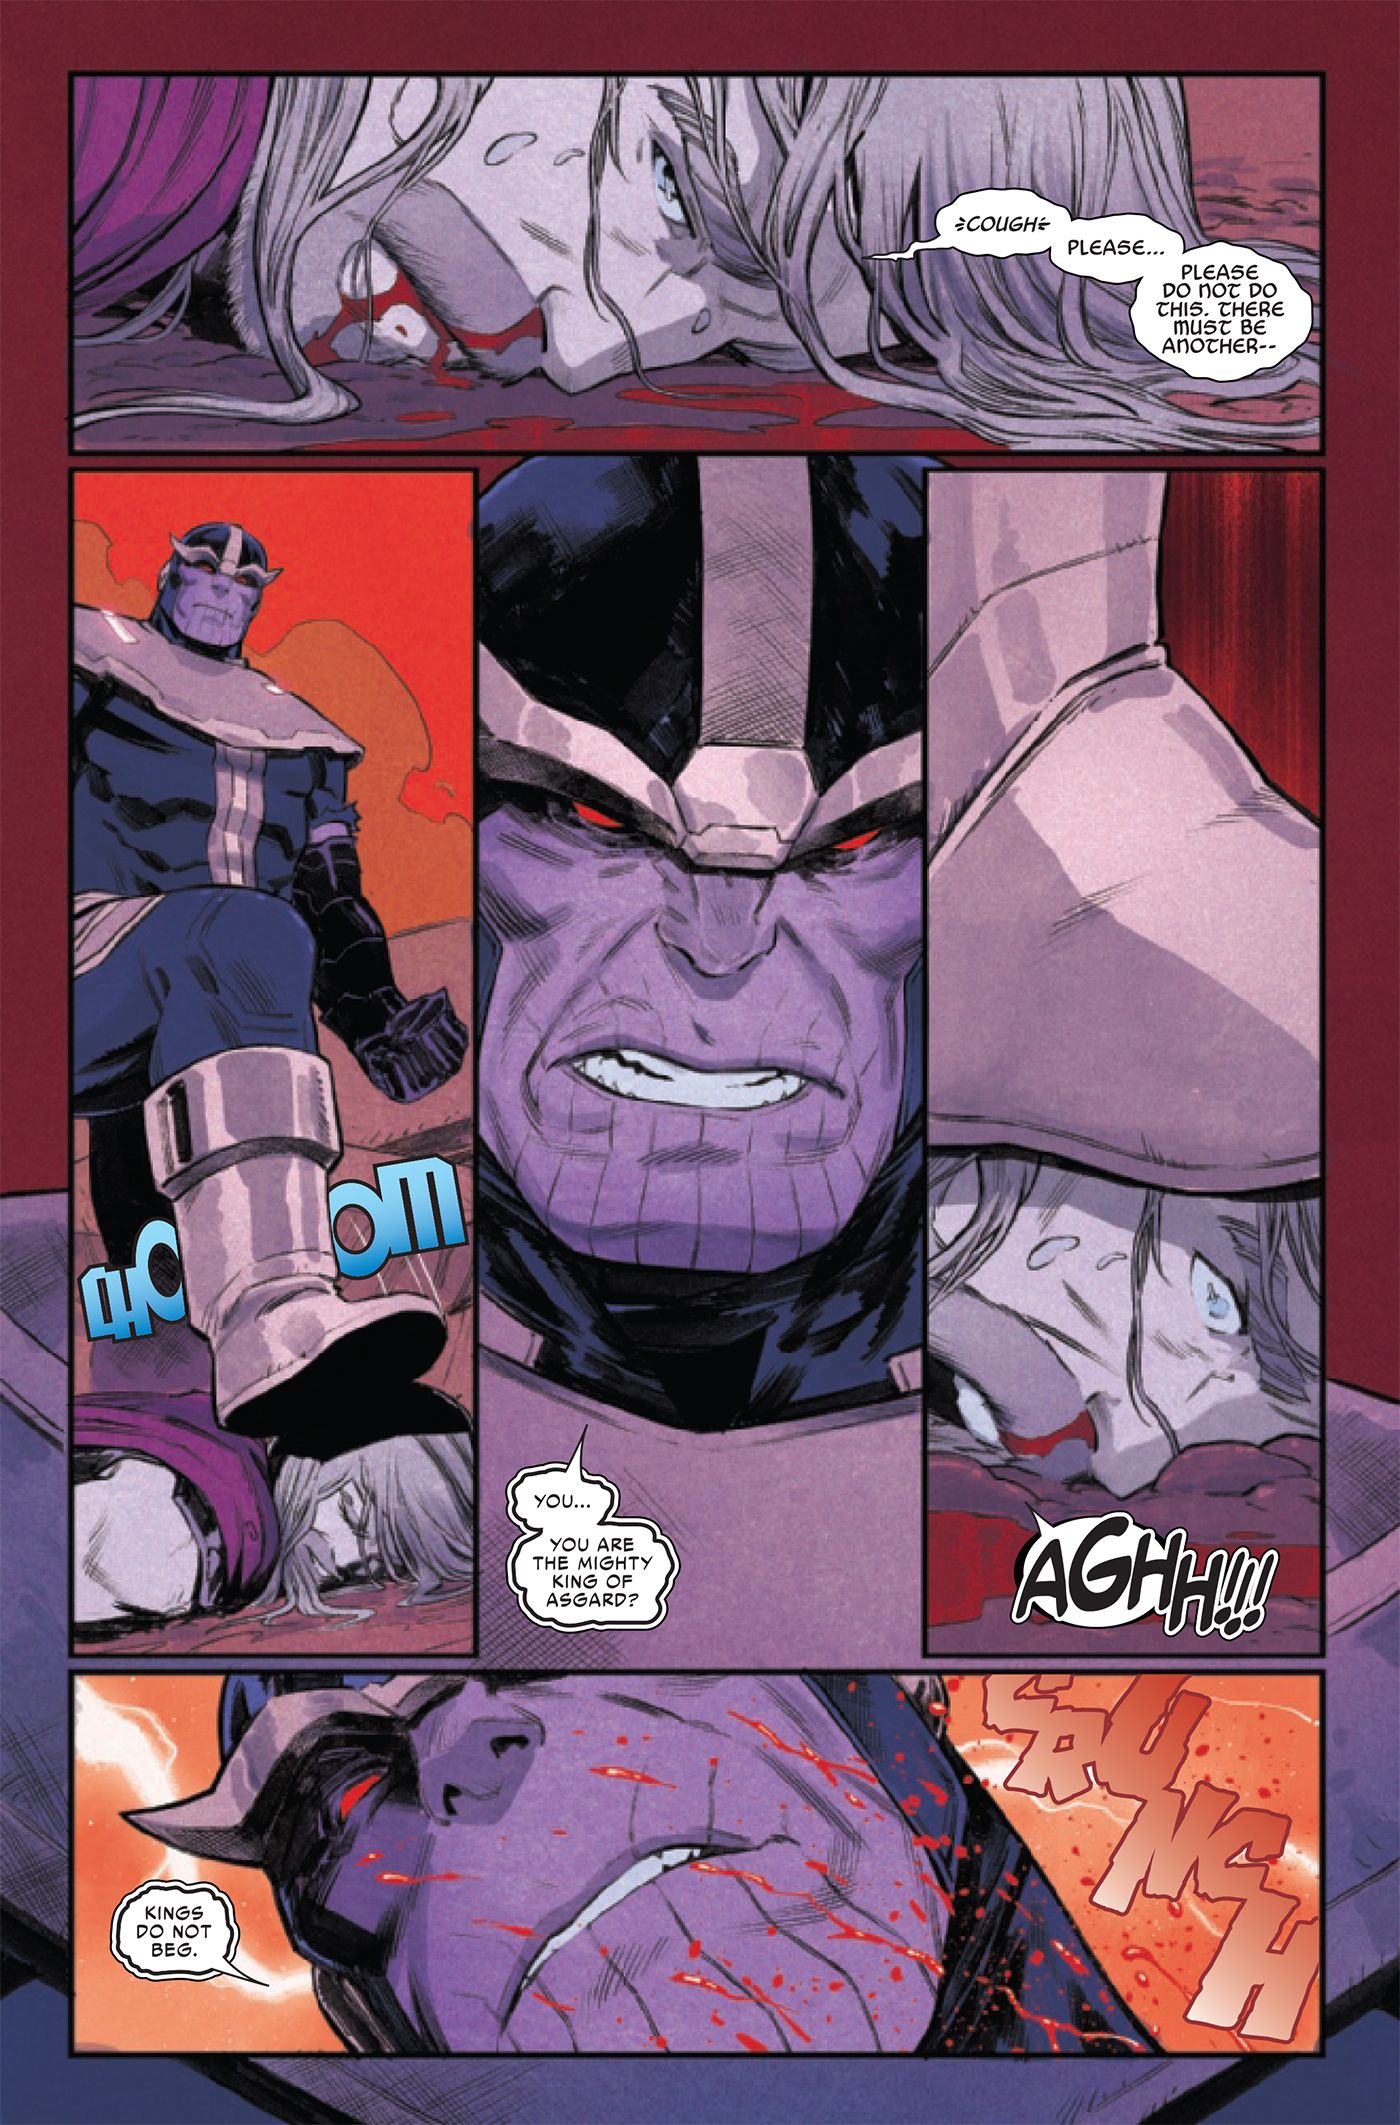 Thanos seemingly kills Thor by crushing him under his foot.